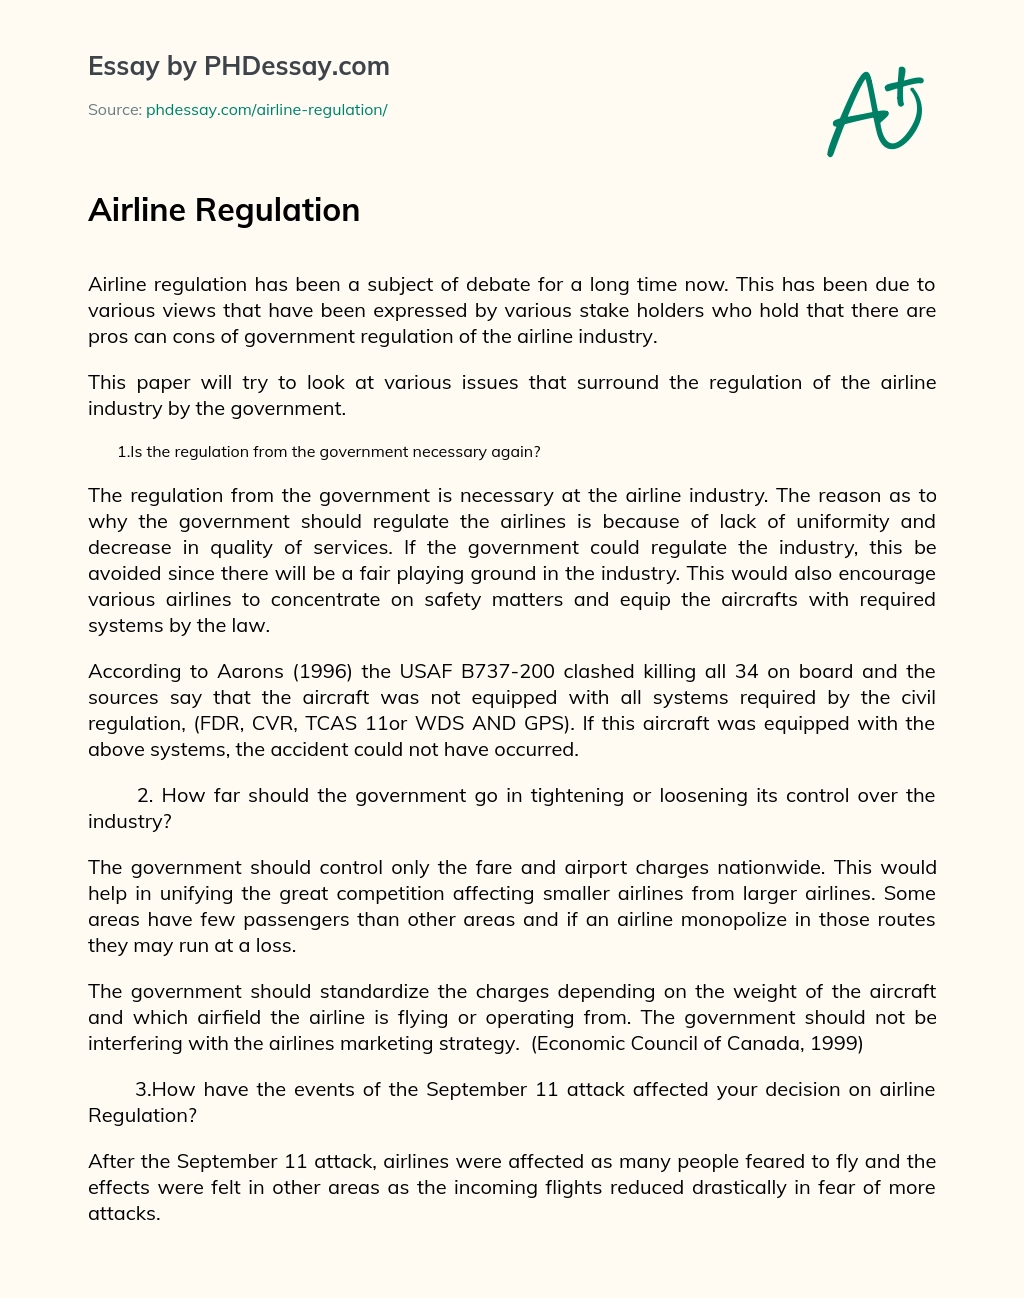 Airline Regulation essay